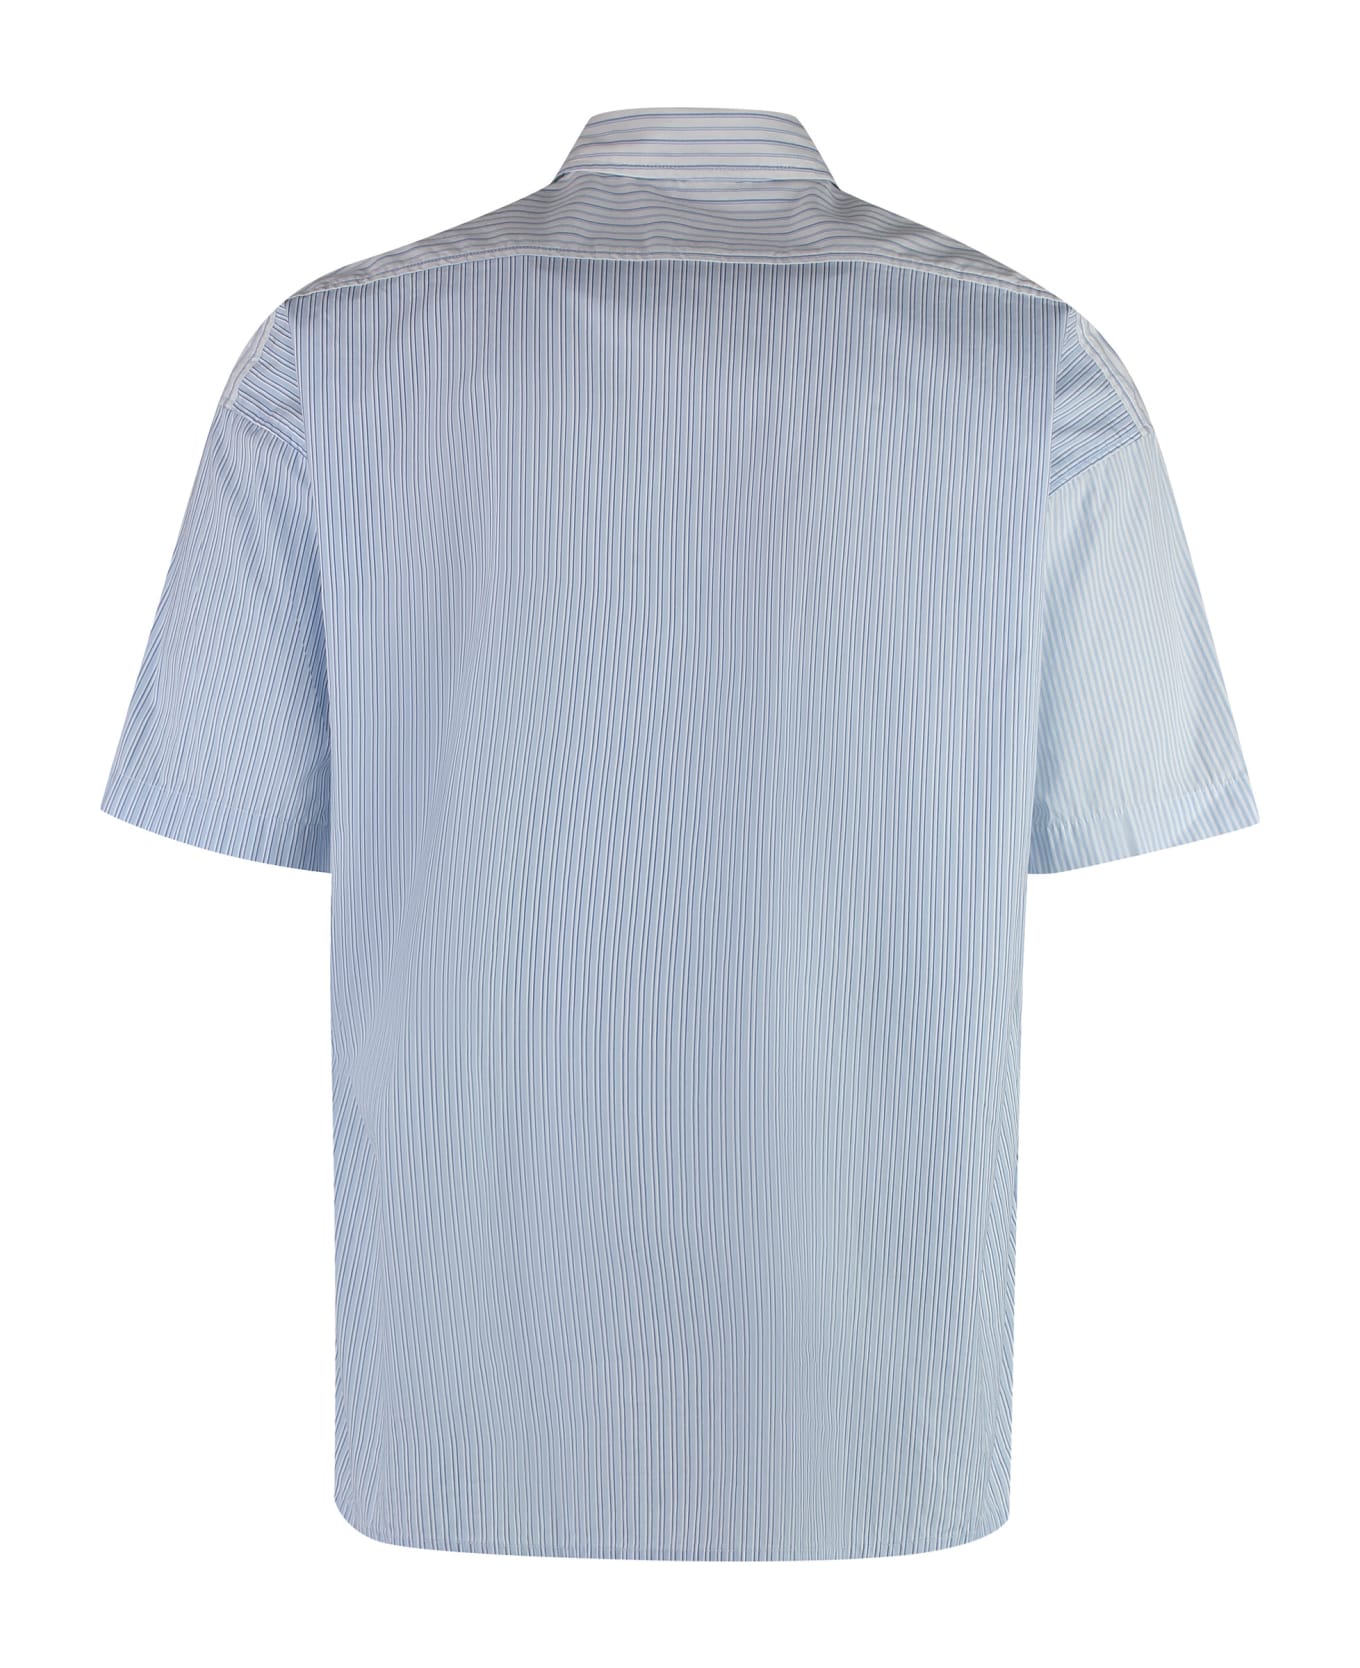 Hugo Boss Striped Cotton Shirt - Light Blue シャツ